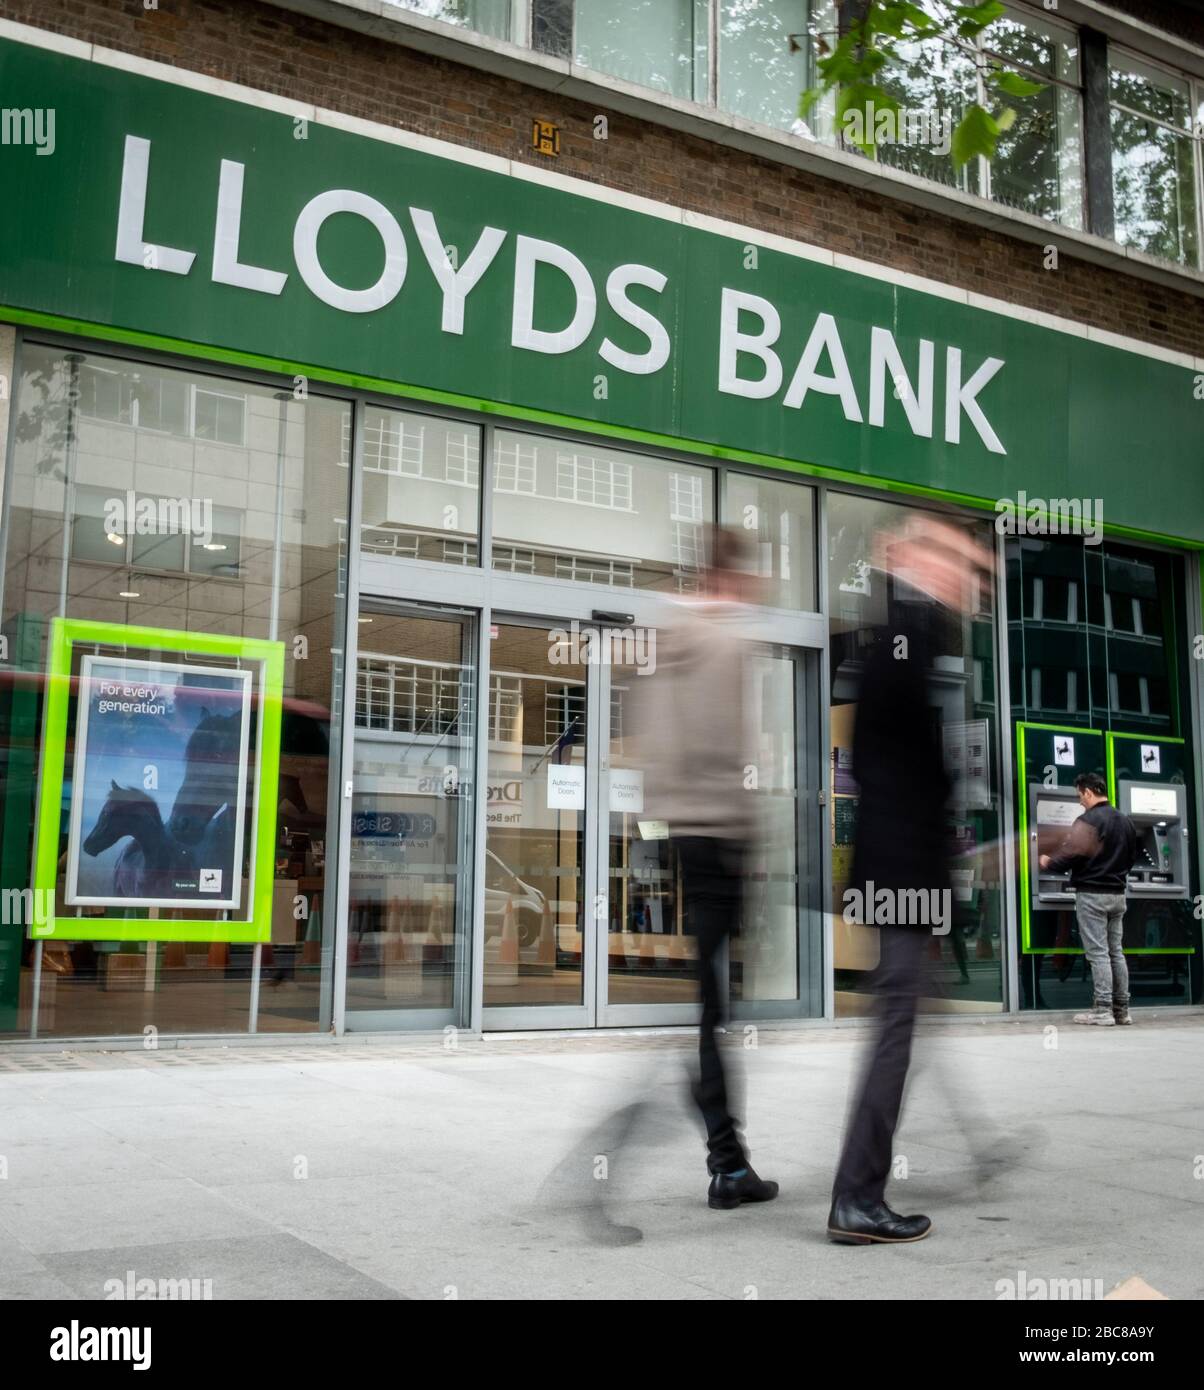 Lloyds- British high street bank branch, exterior logo / signage- London Stock Photo